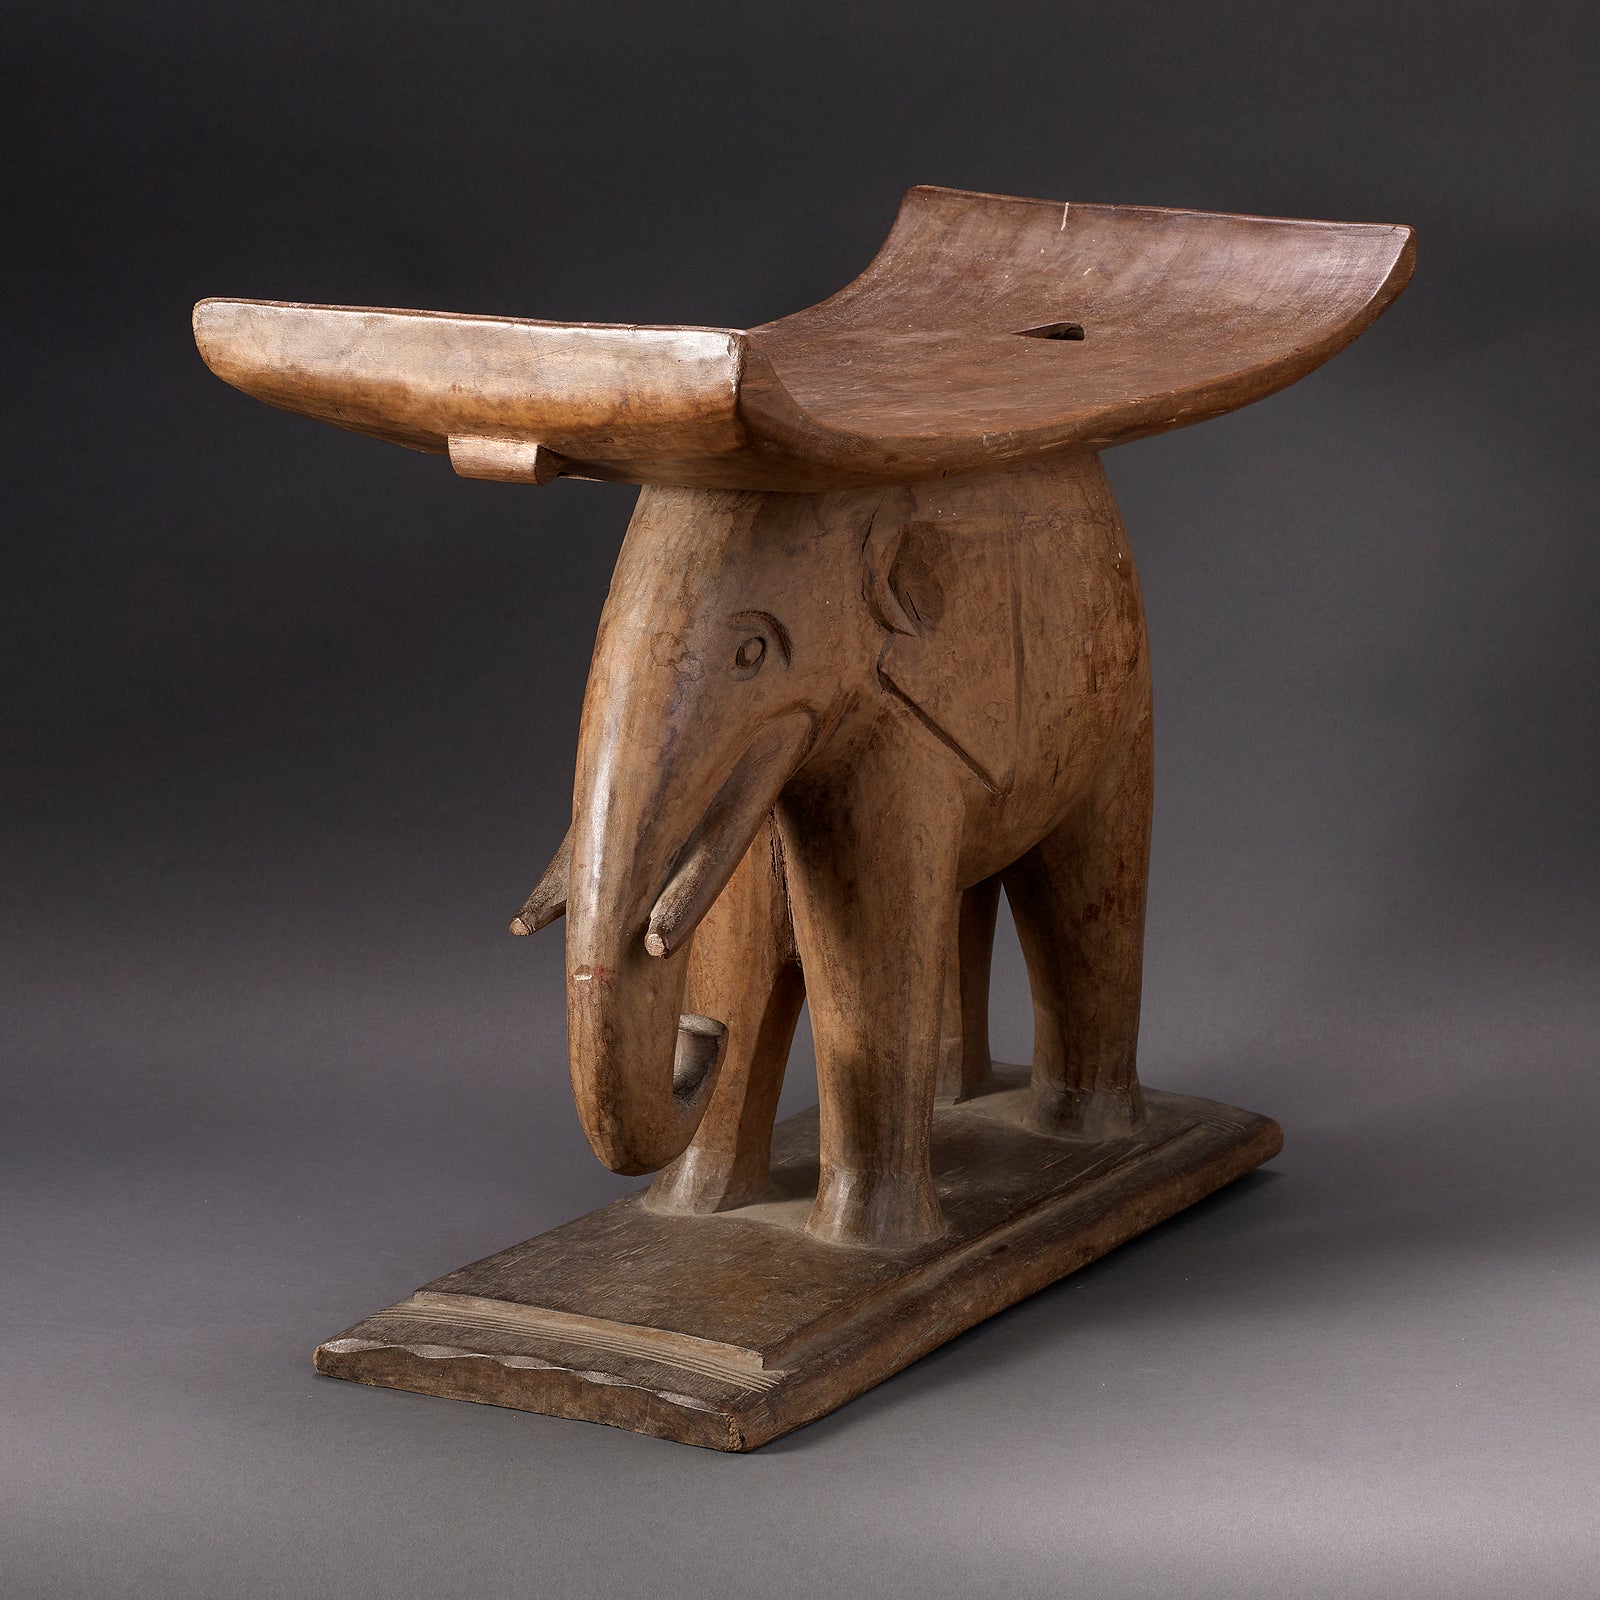 Ghana  Ashanti Stools  Wooden Furniture  Tribal Art - Furniture  Collectibles Furniture  African Furniture  African Art